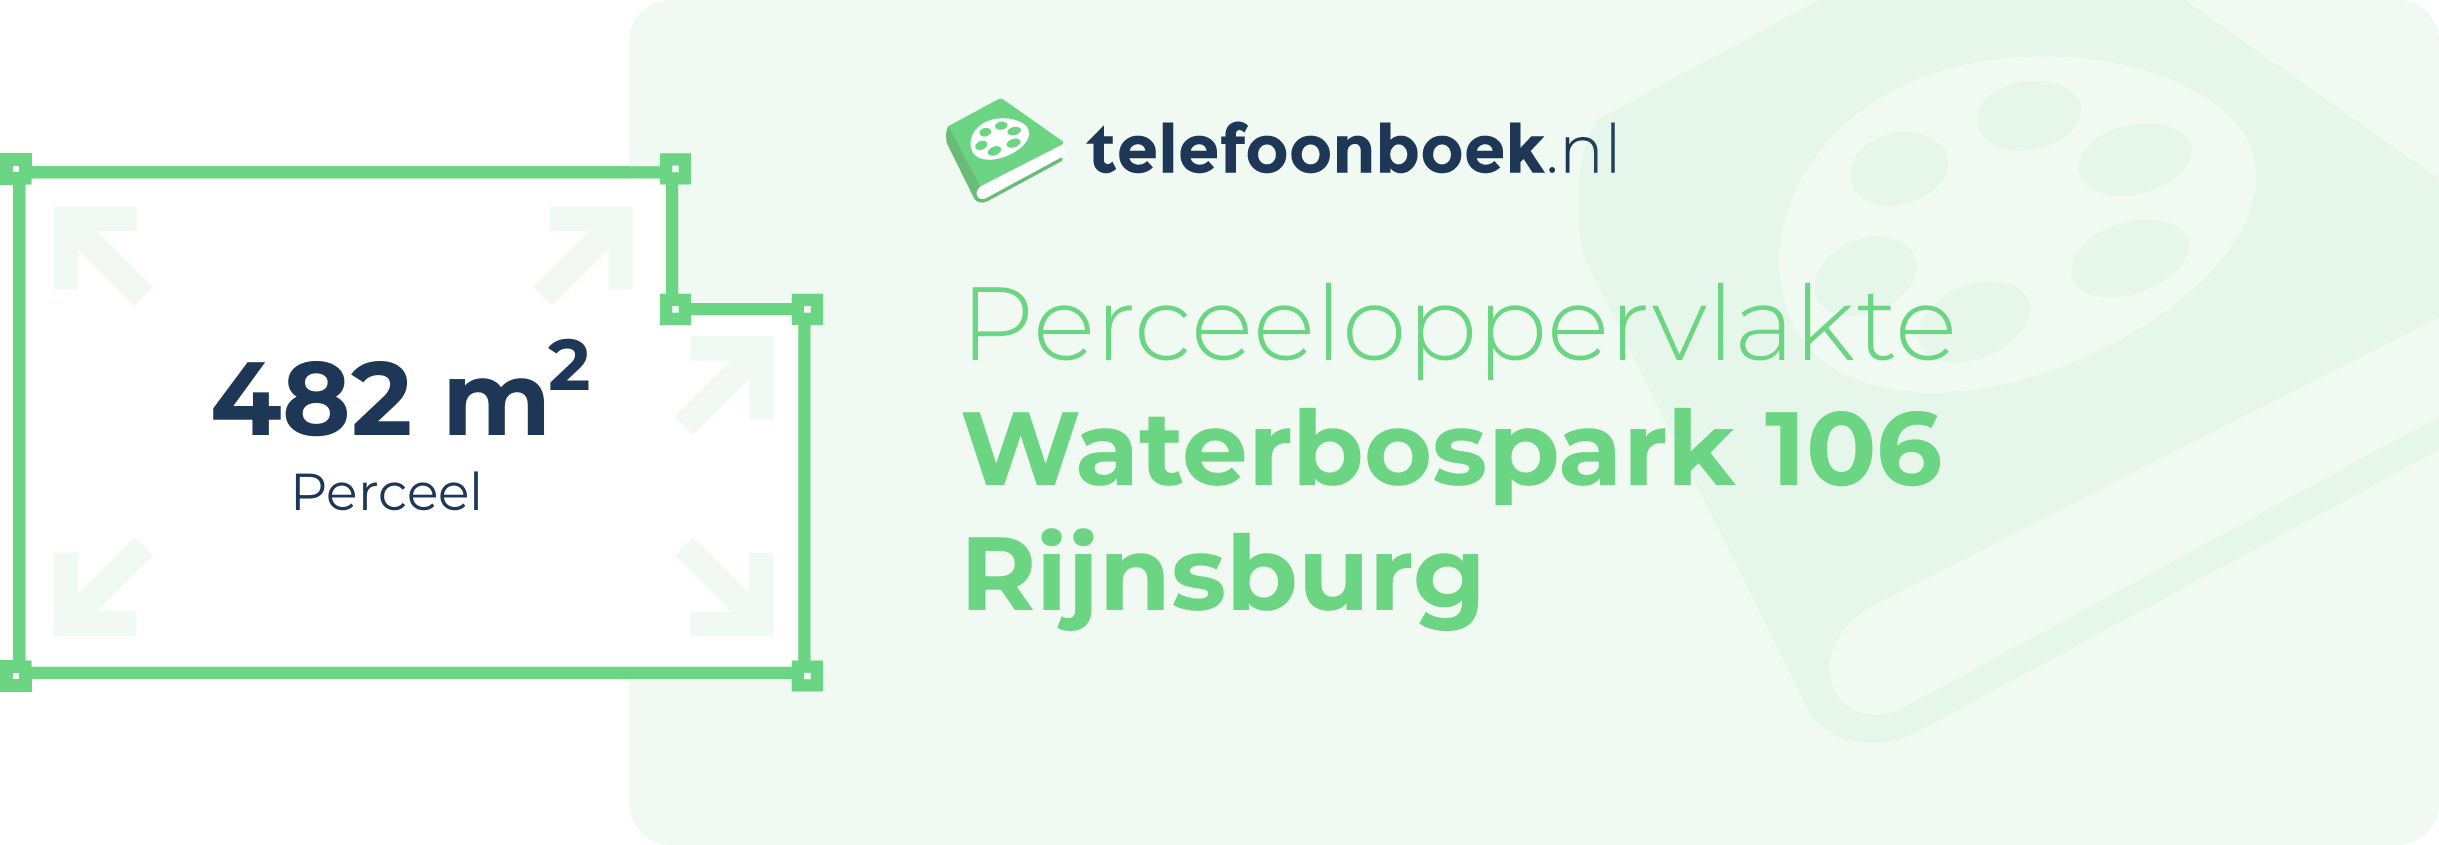 Perceeloppervlakte Waterbospark 106 Rijnsburg